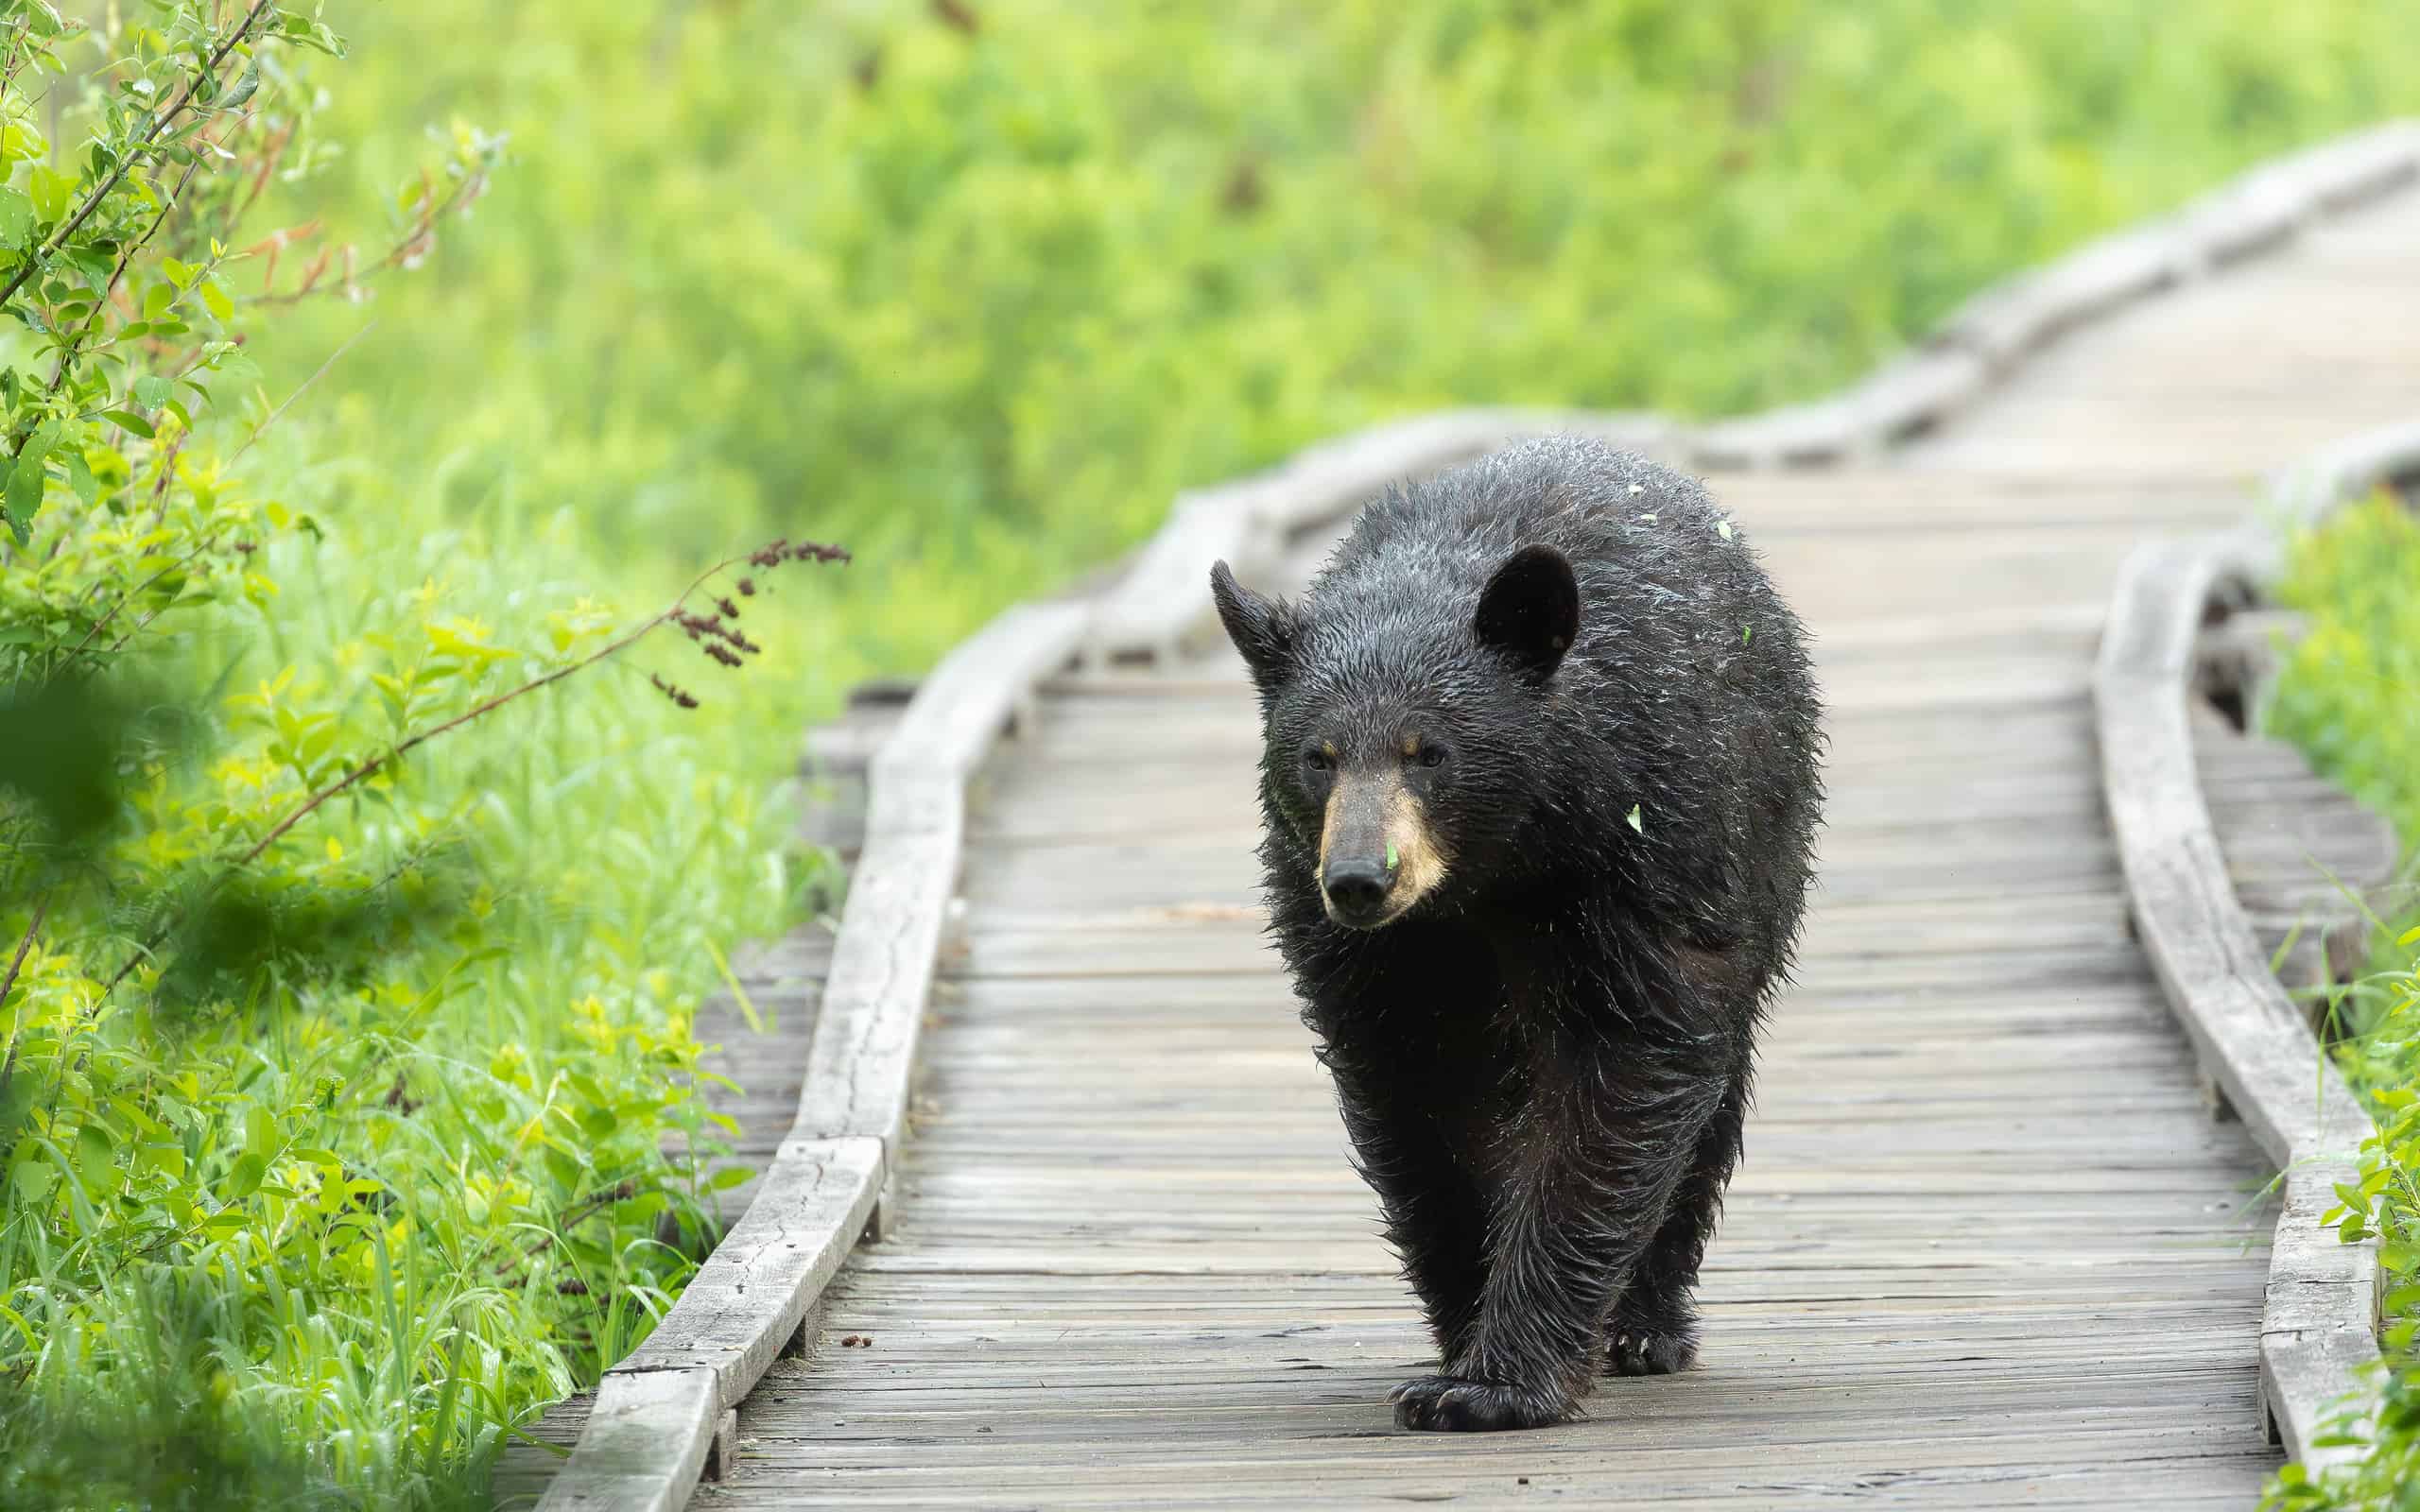 black bear walks alone on wooden boardwalk, surrounded by green, lush trees